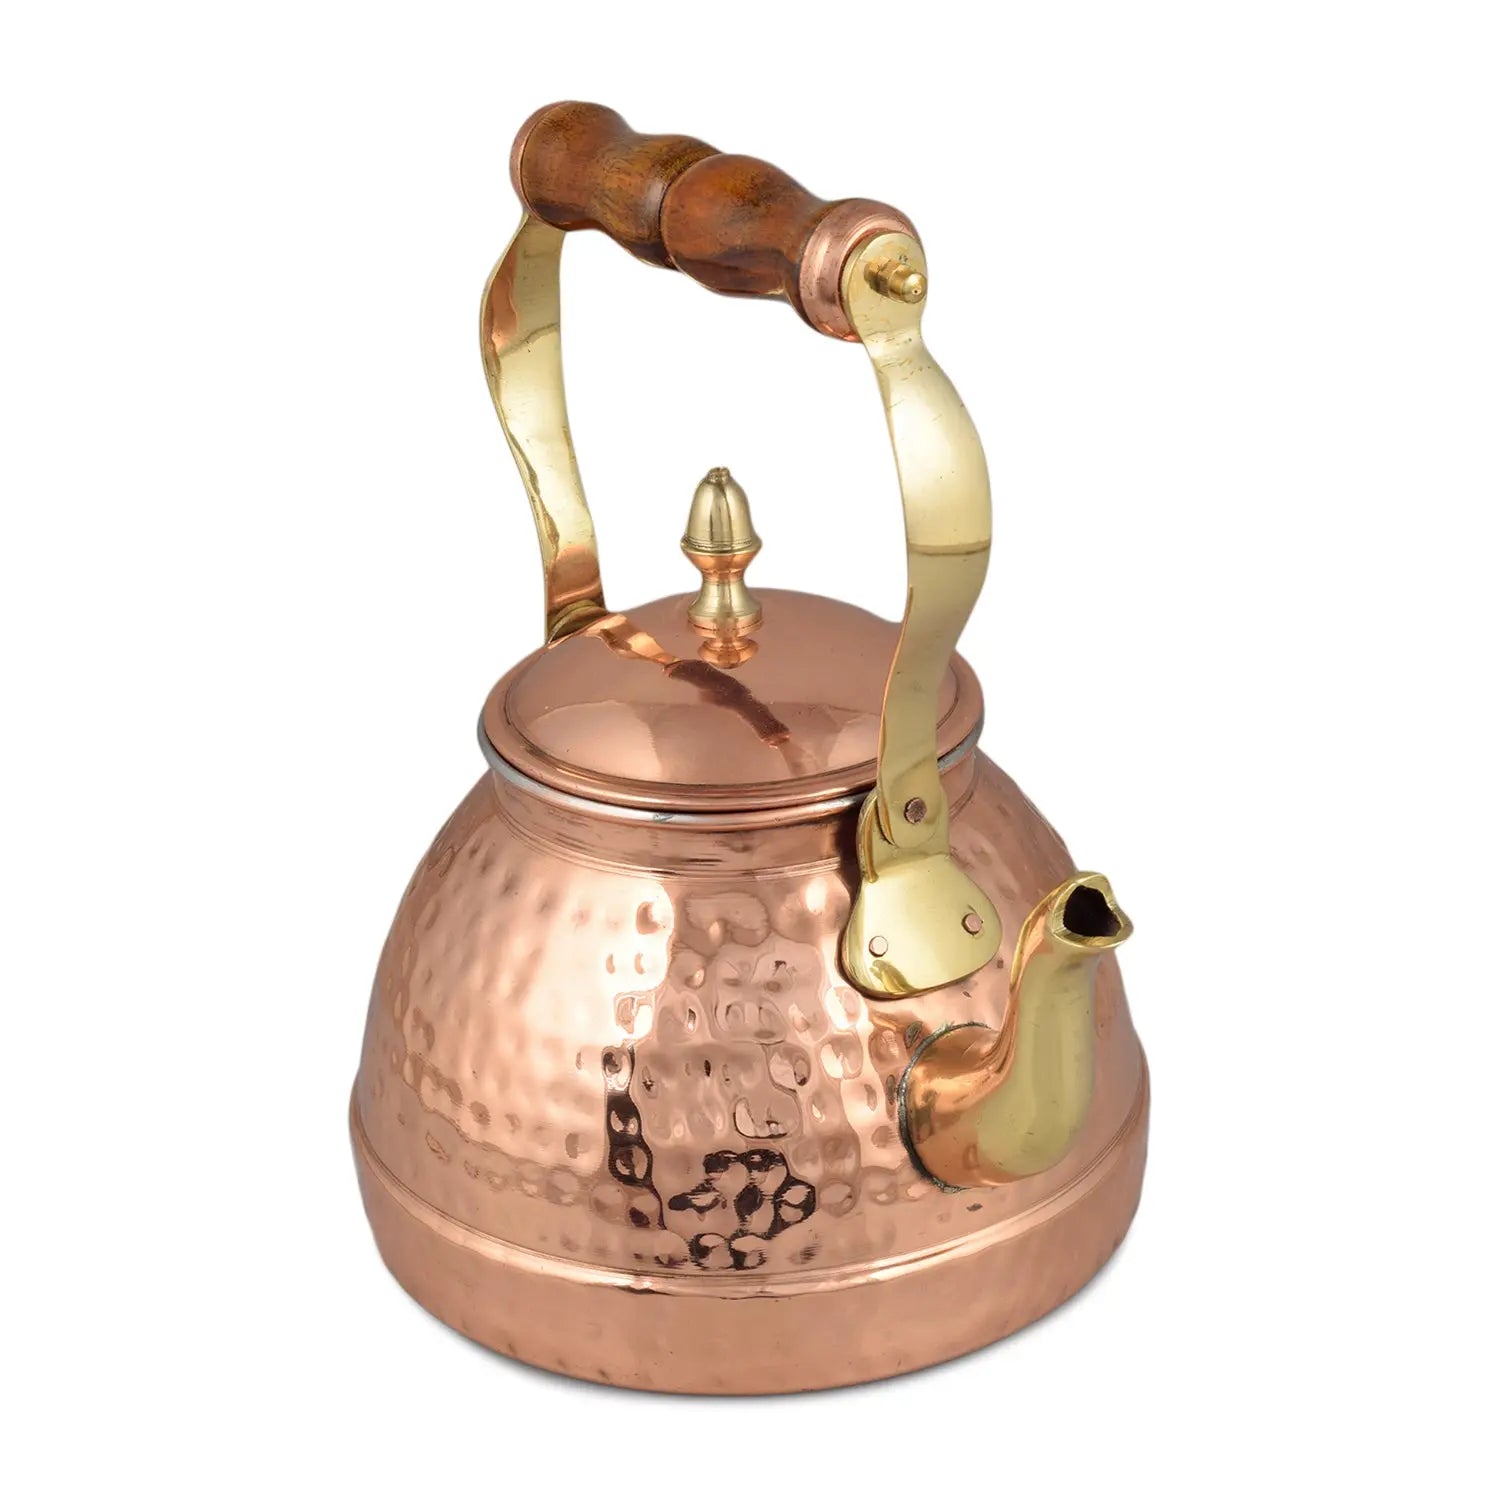 Copper tea Boiler